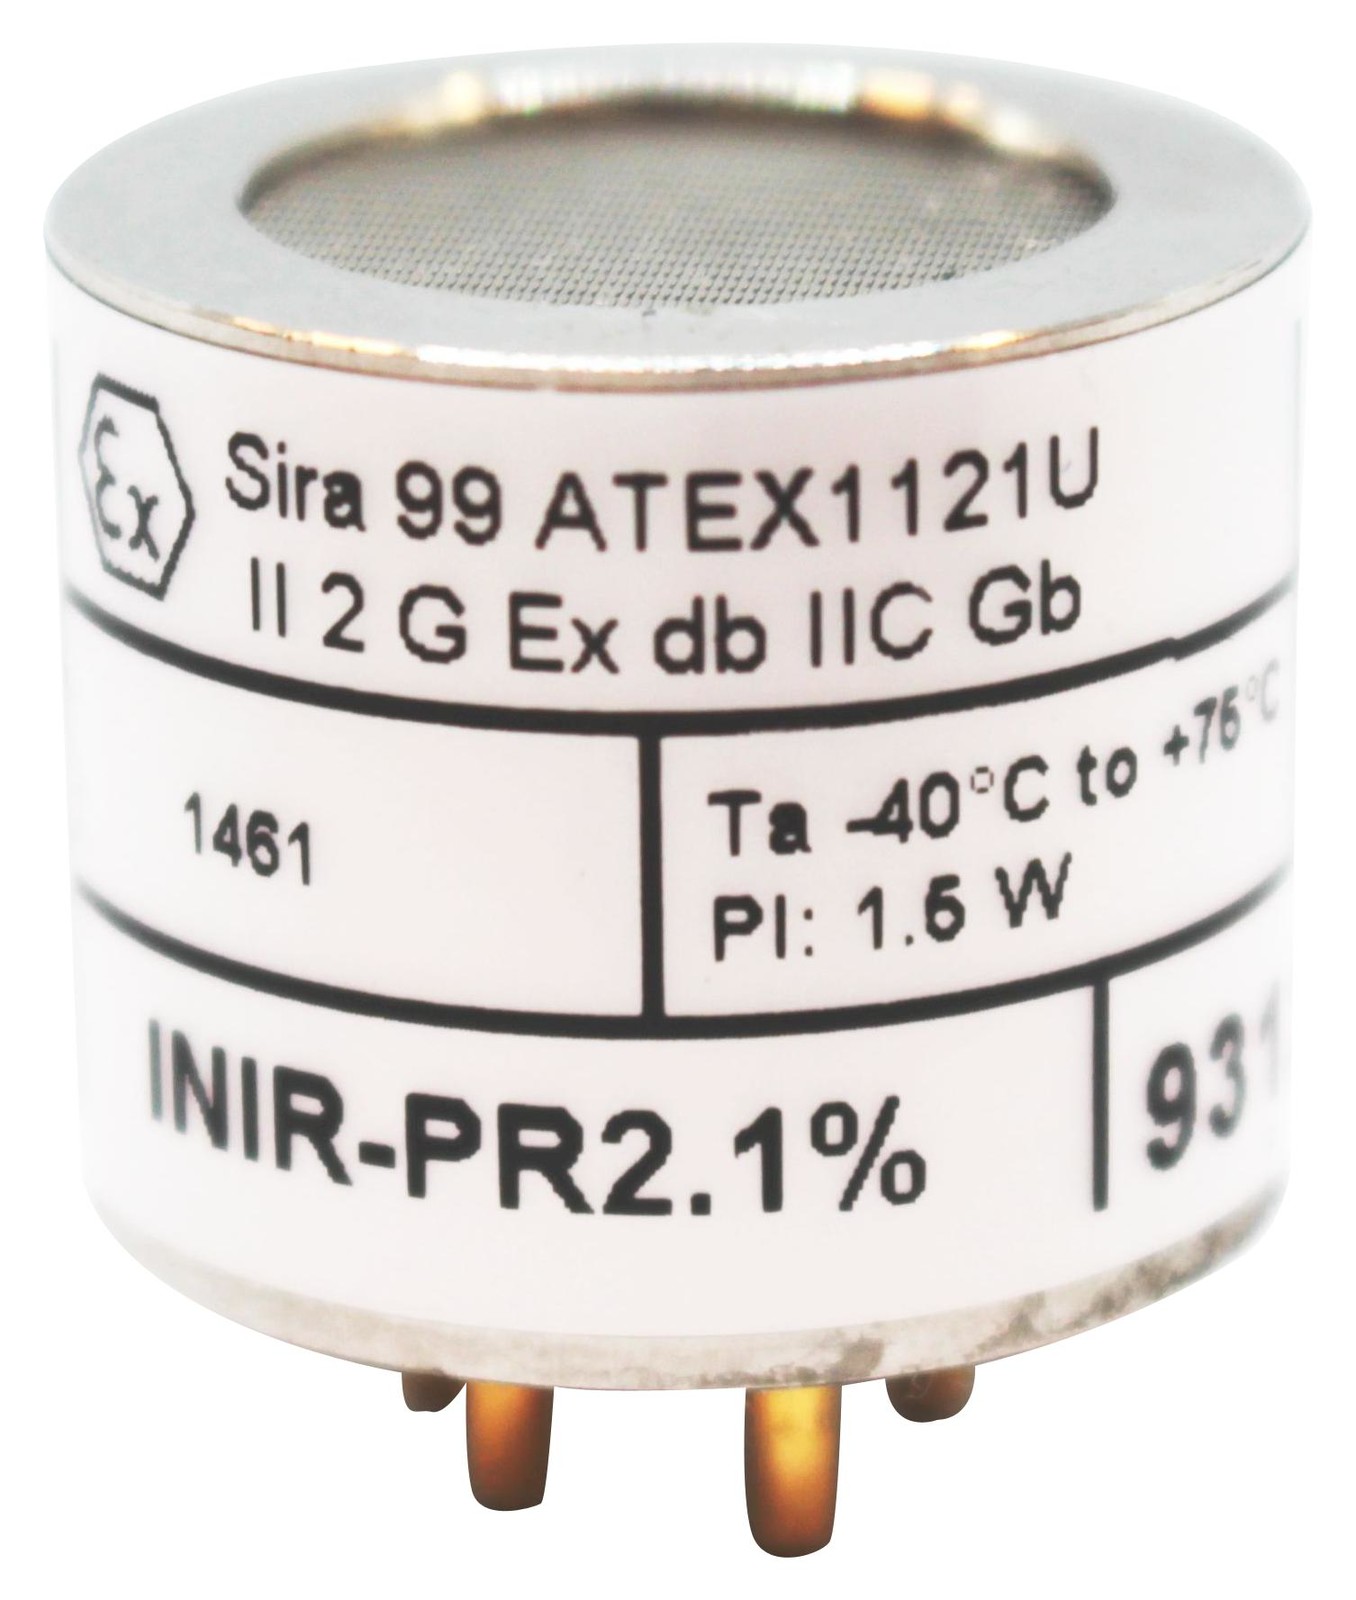 Amphenol Sgx Sensortech Inir-Pr2.1%. Gas Detection Sensor, Propane, 100Ppm